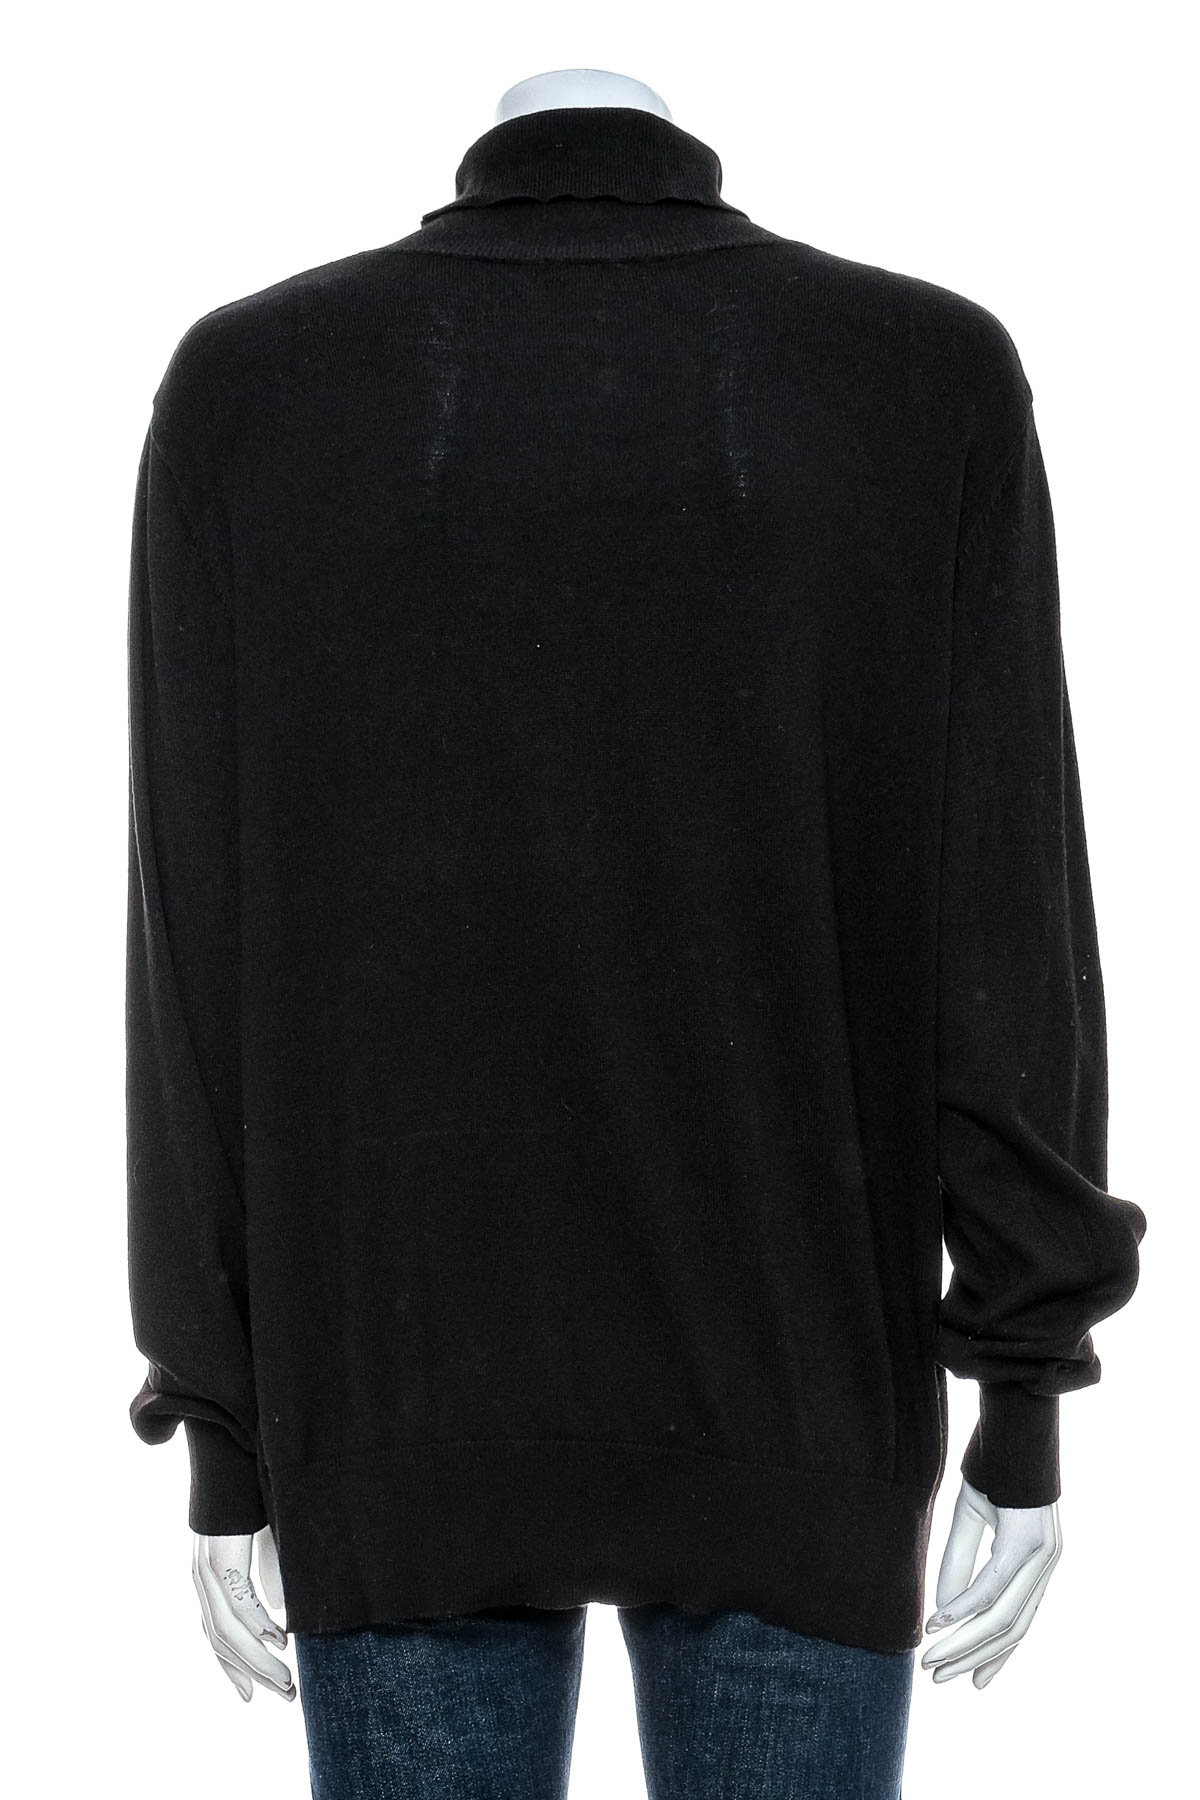 Women's sweater - H&M Basic - 1